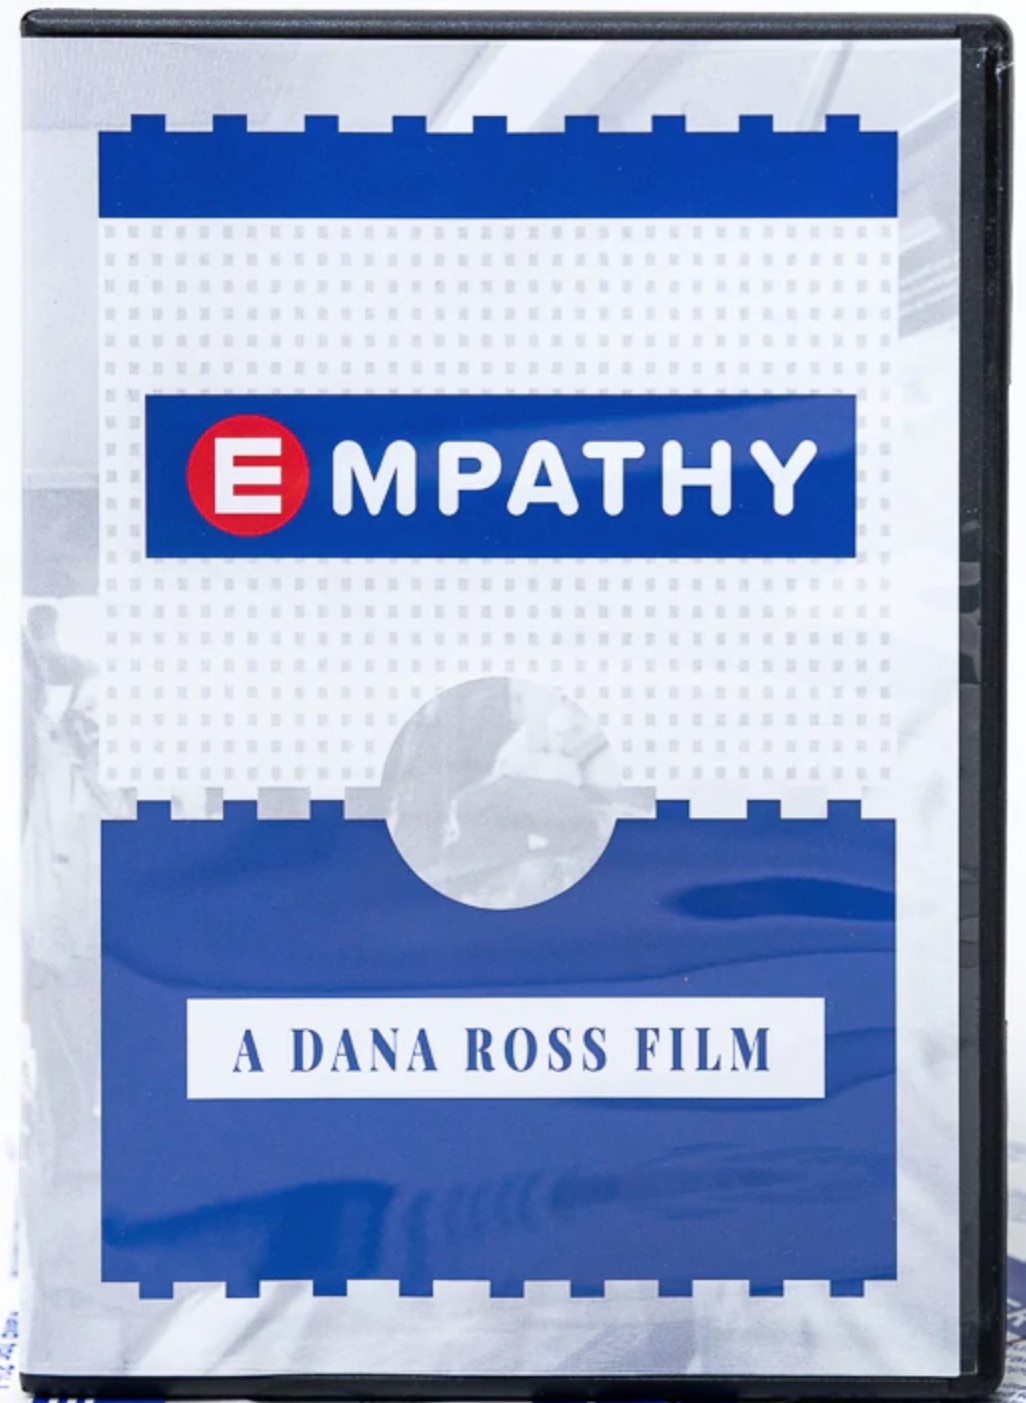 Empathy cover art